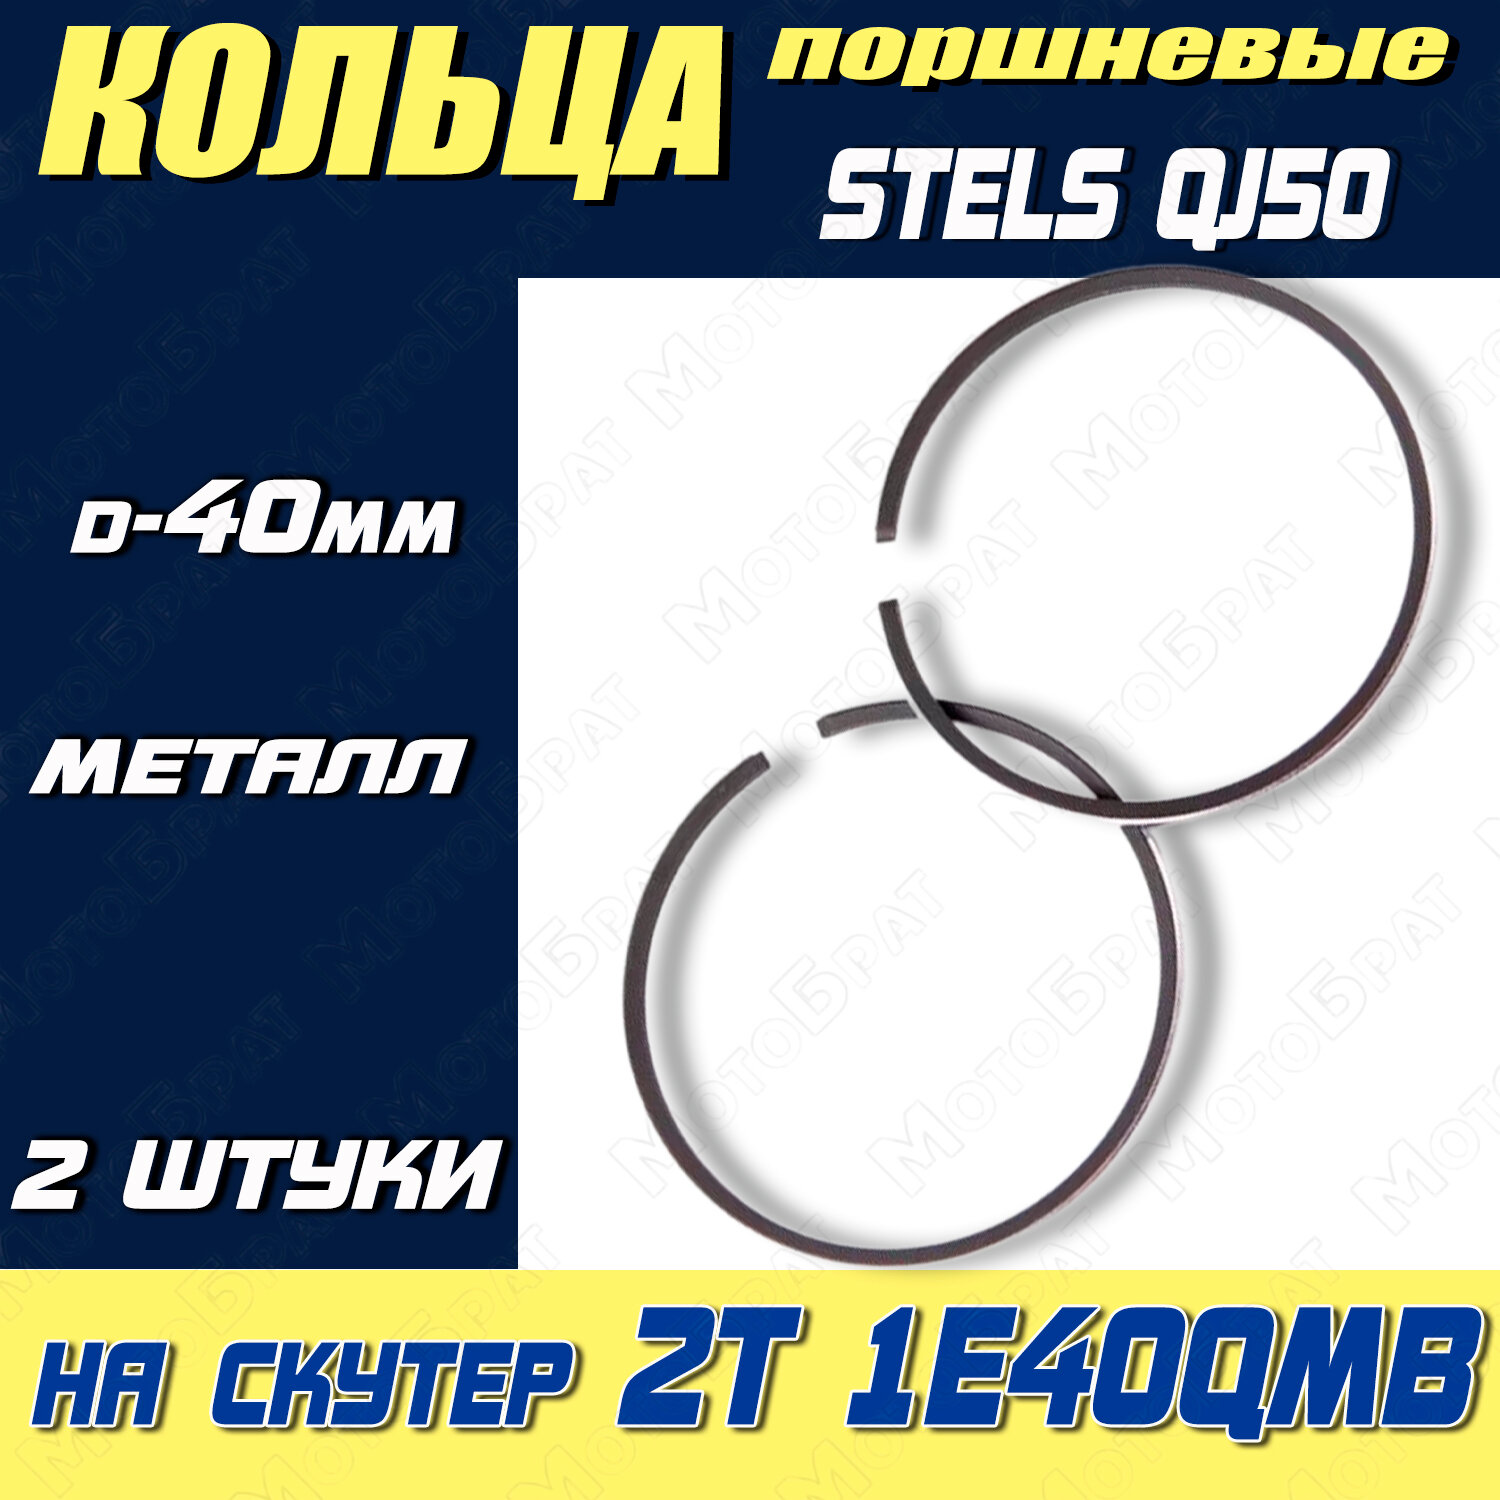 Кольца поршневые d40mm для скутера 2Т 1E40QMB (Stels QJ50)